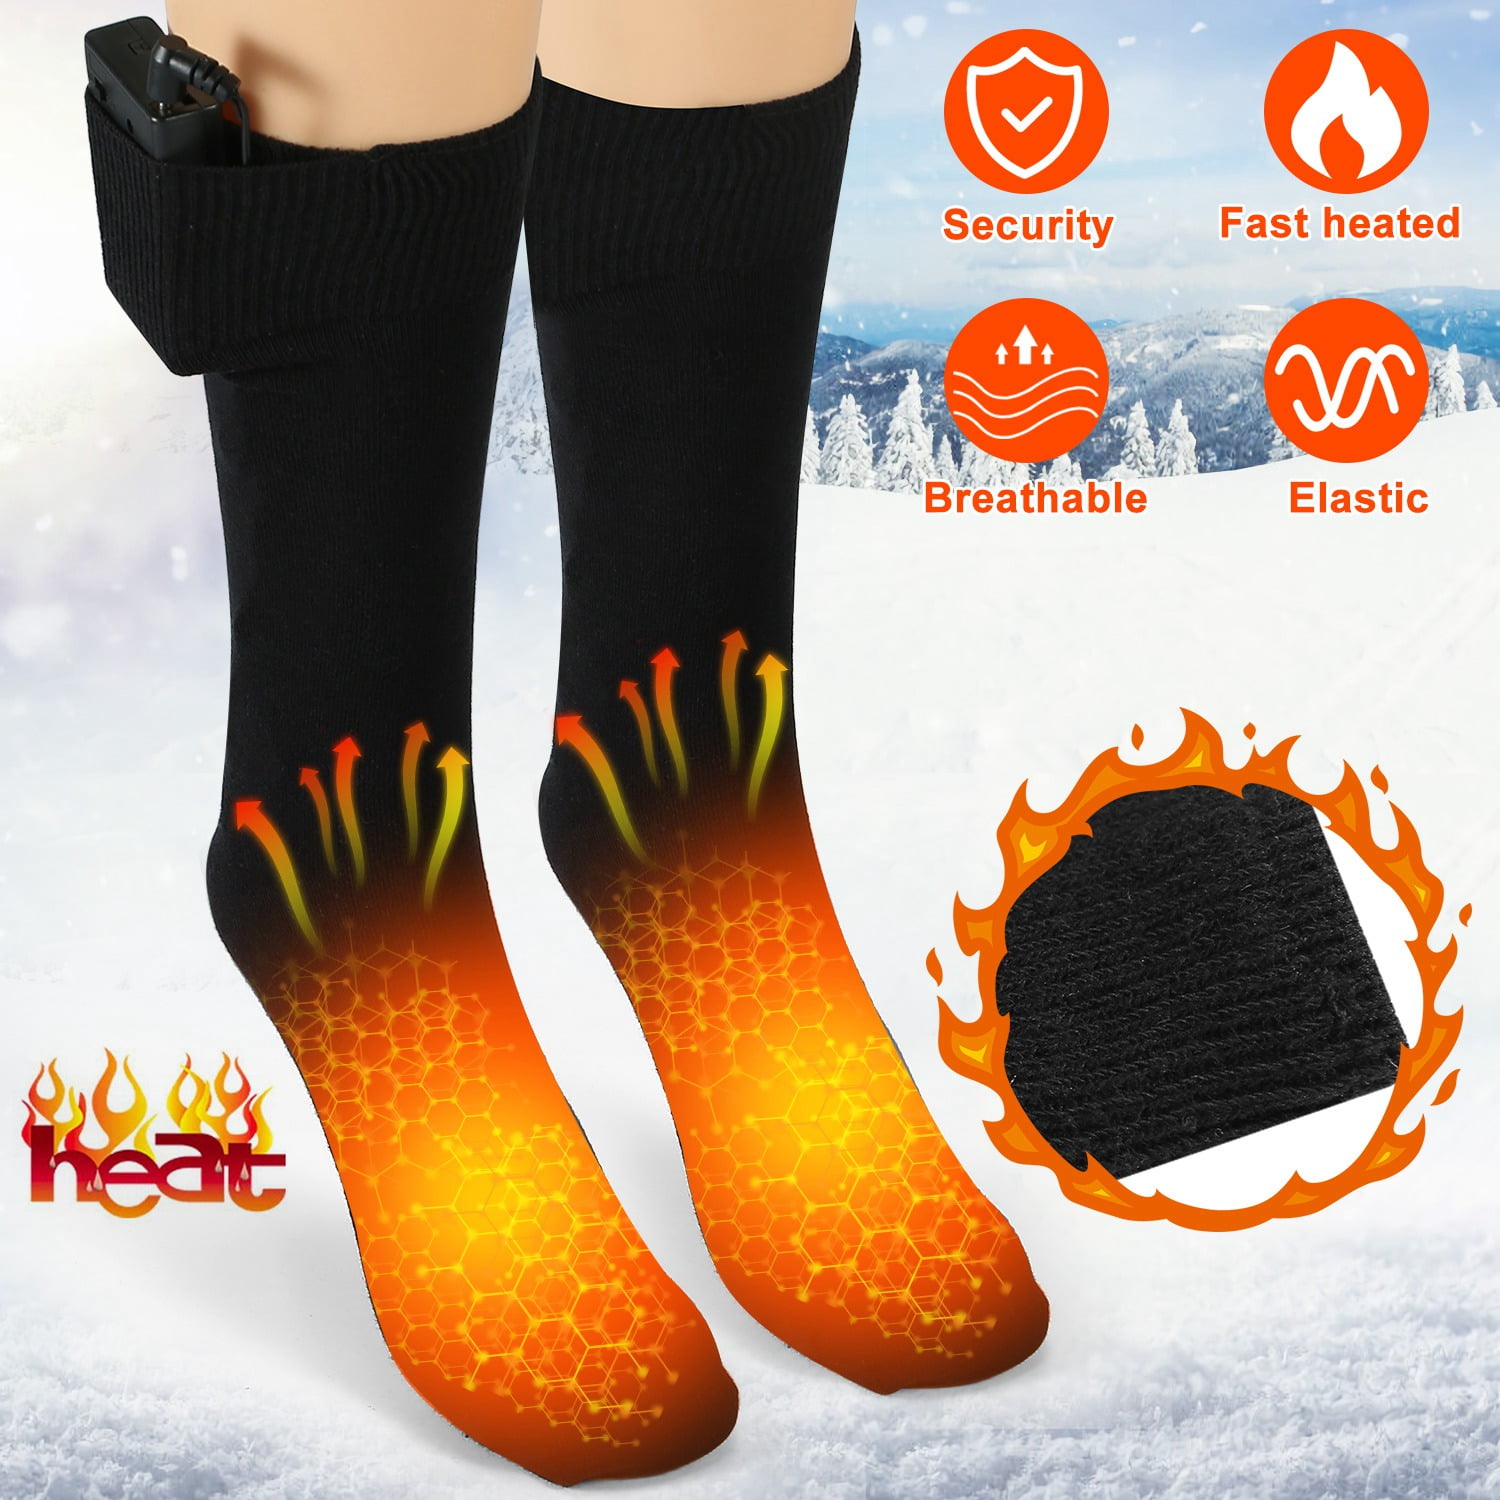 Rechargable Battery Electric Heated Socks Boot Feet Warmer Winter Black Unisex 